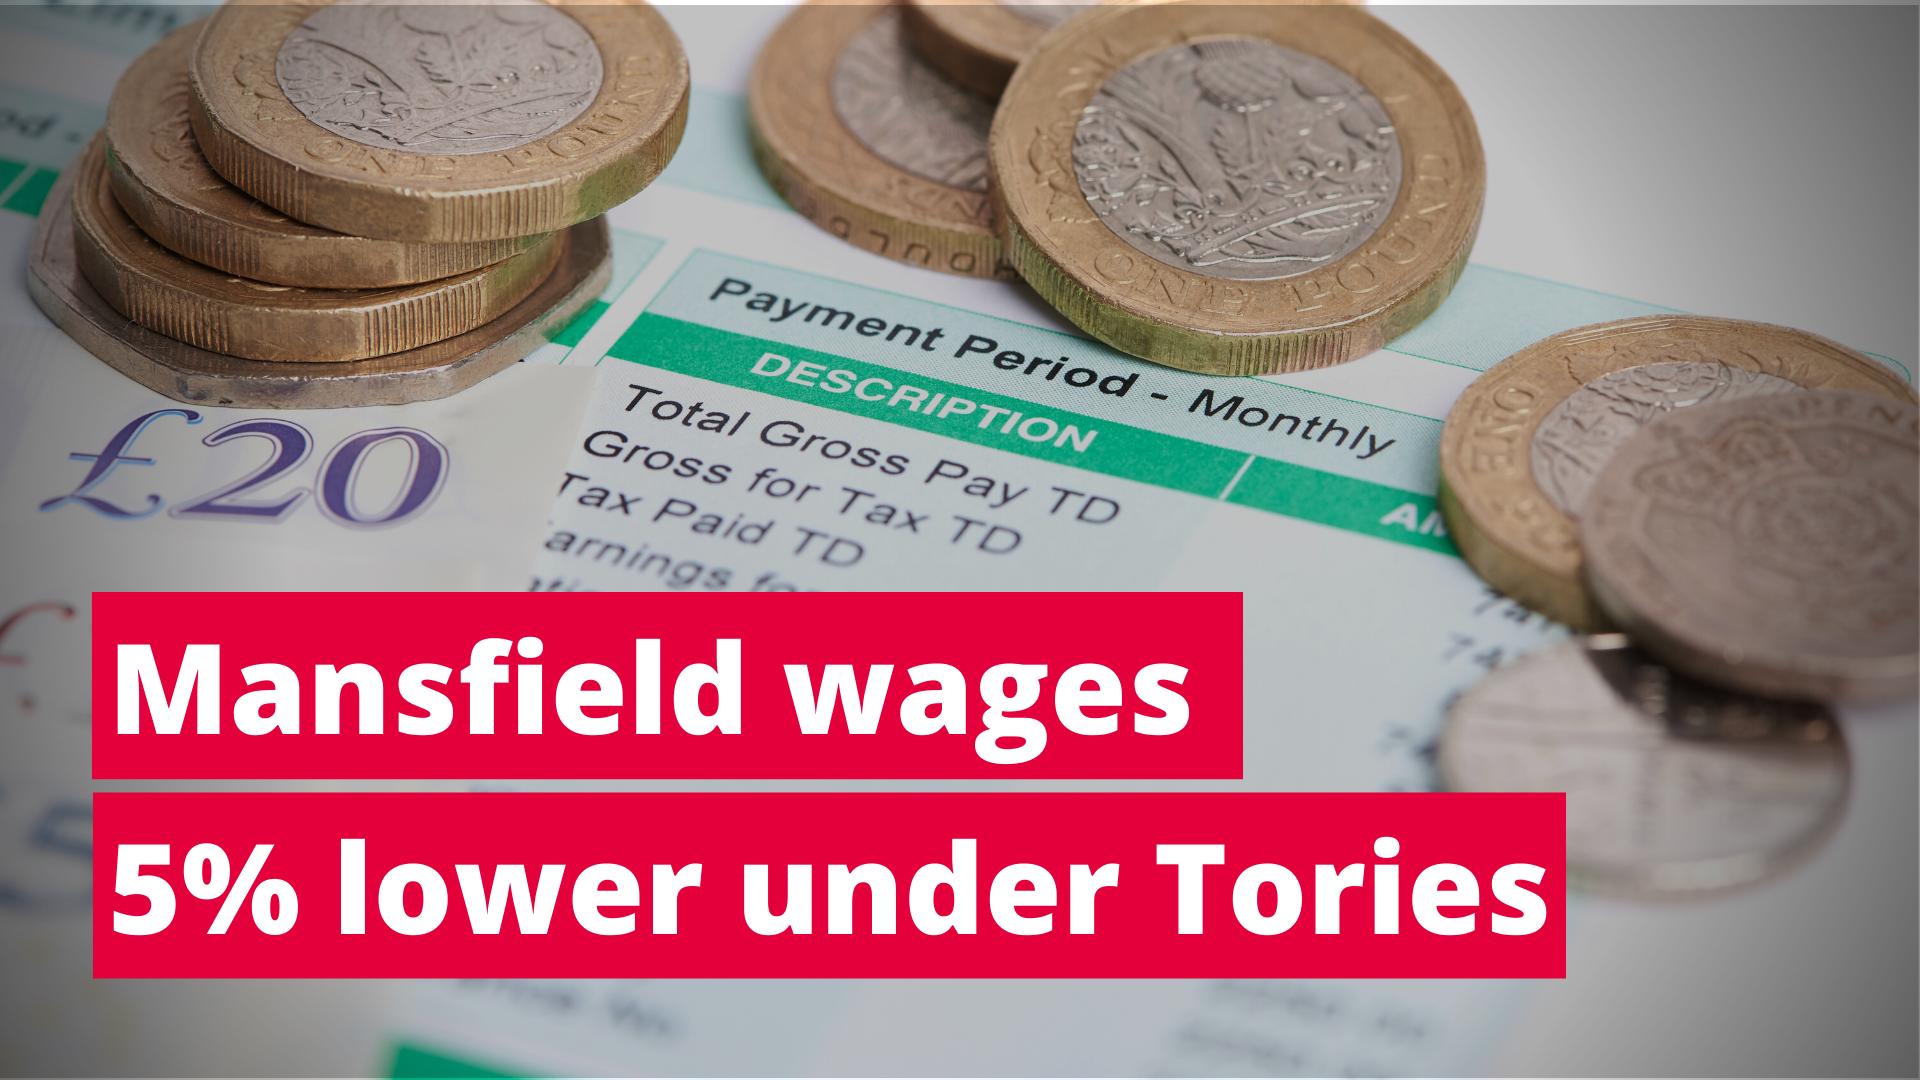 Mansfield wages 5% lower under Tories